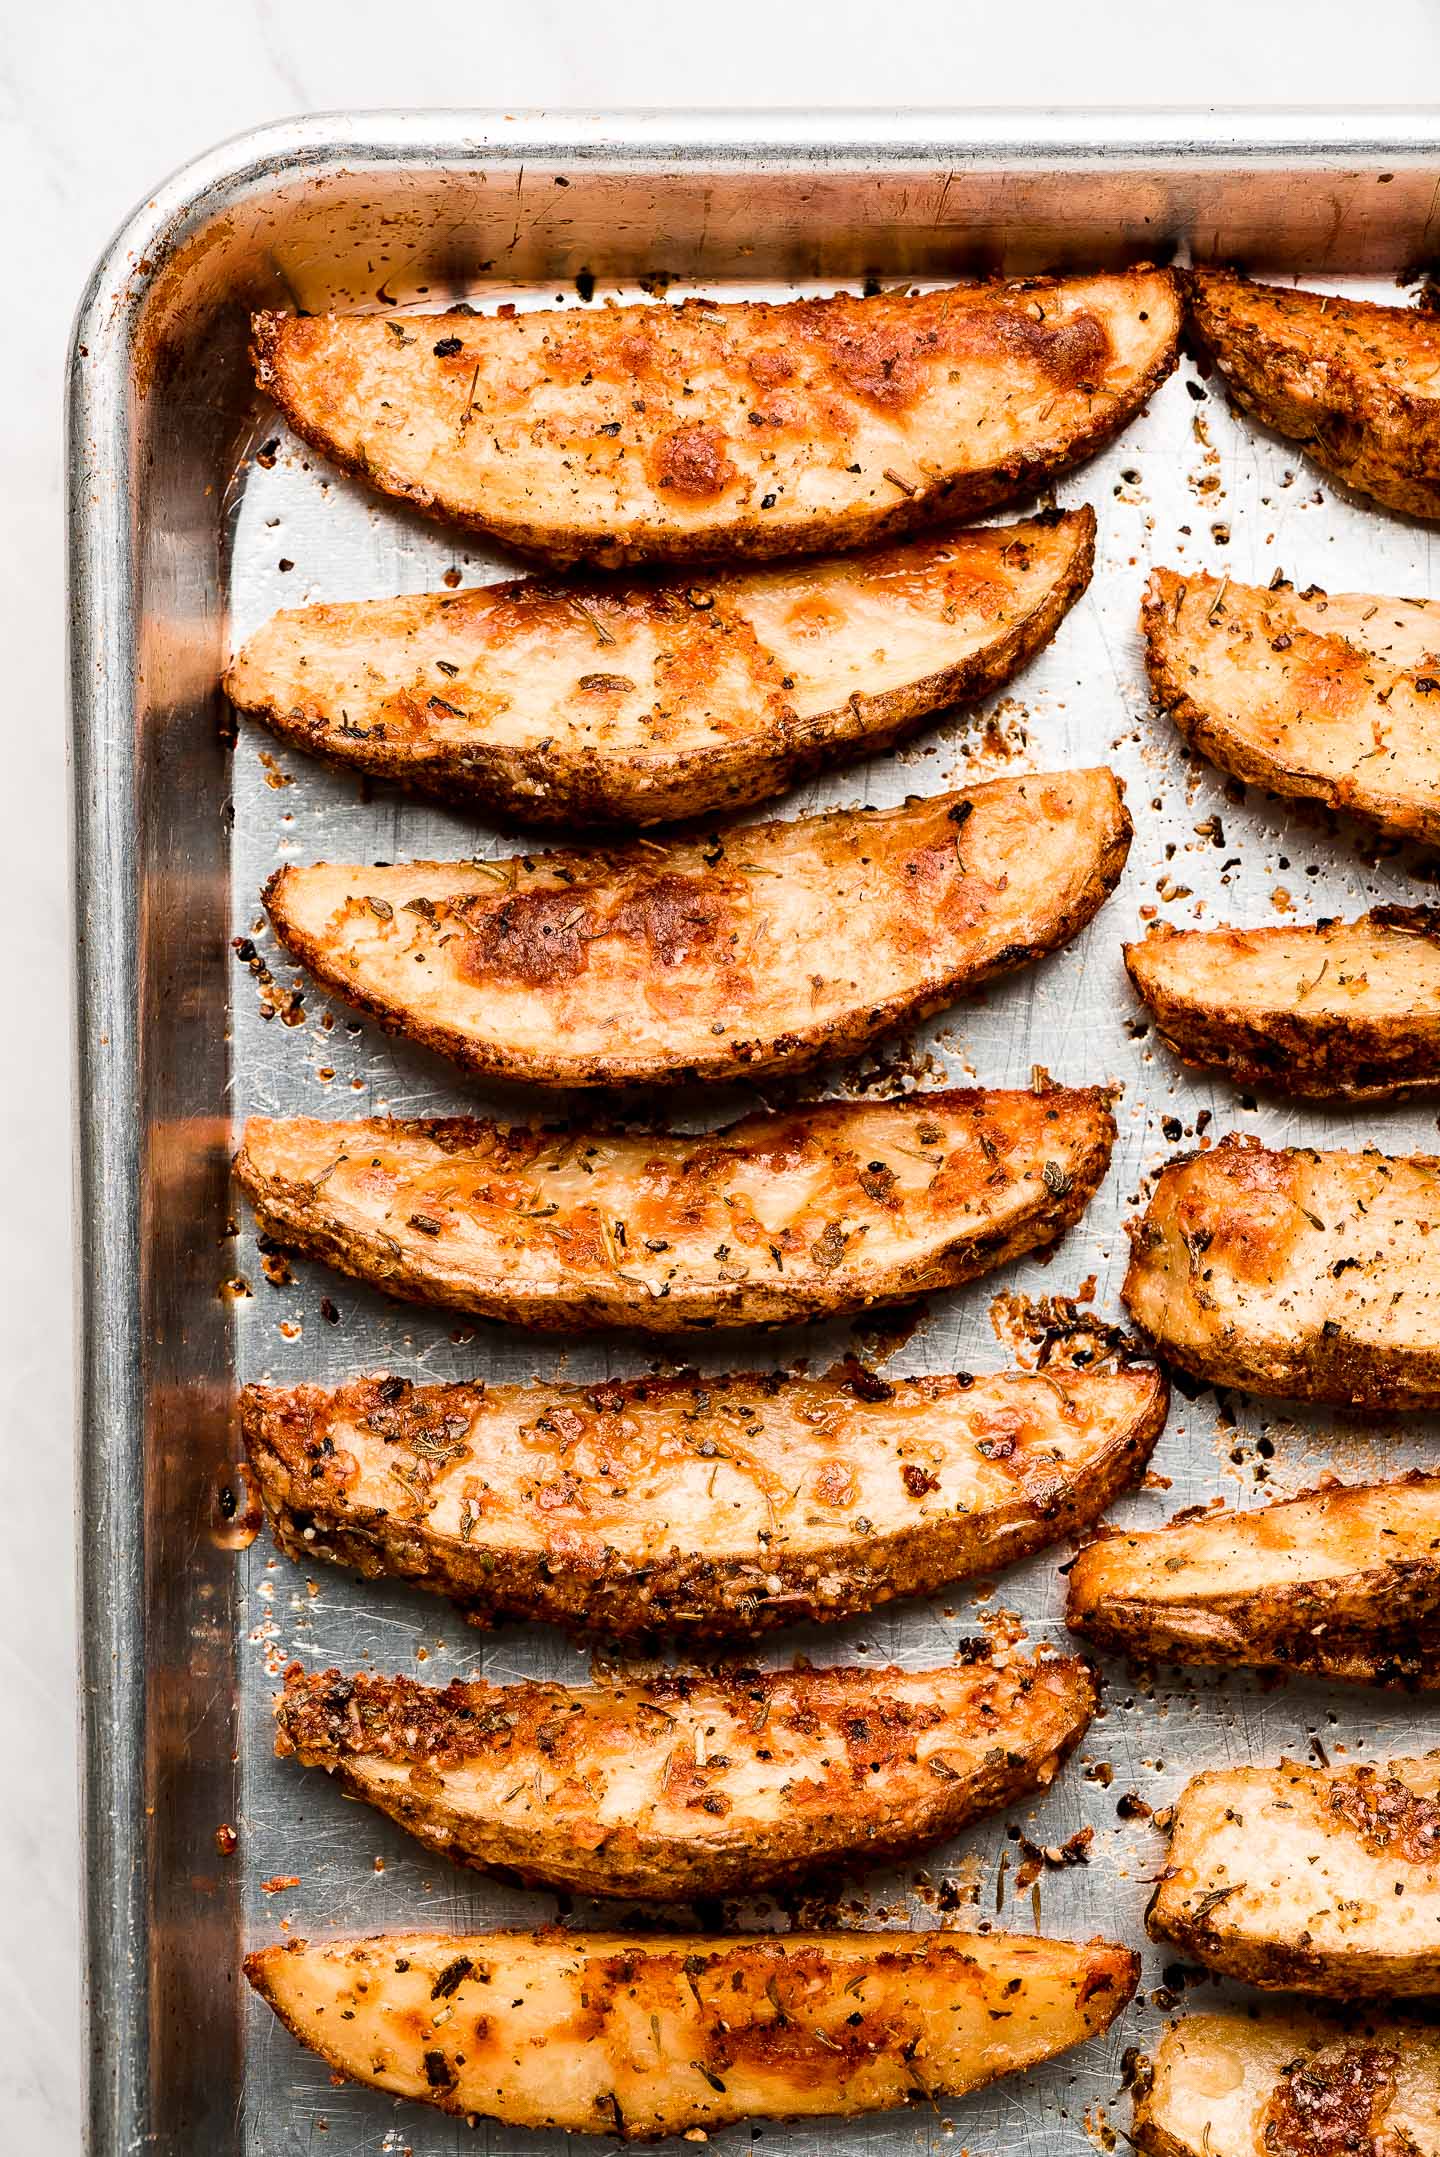 Crispy Baked Potato Wedges uniformity lined up on a baking sheet.